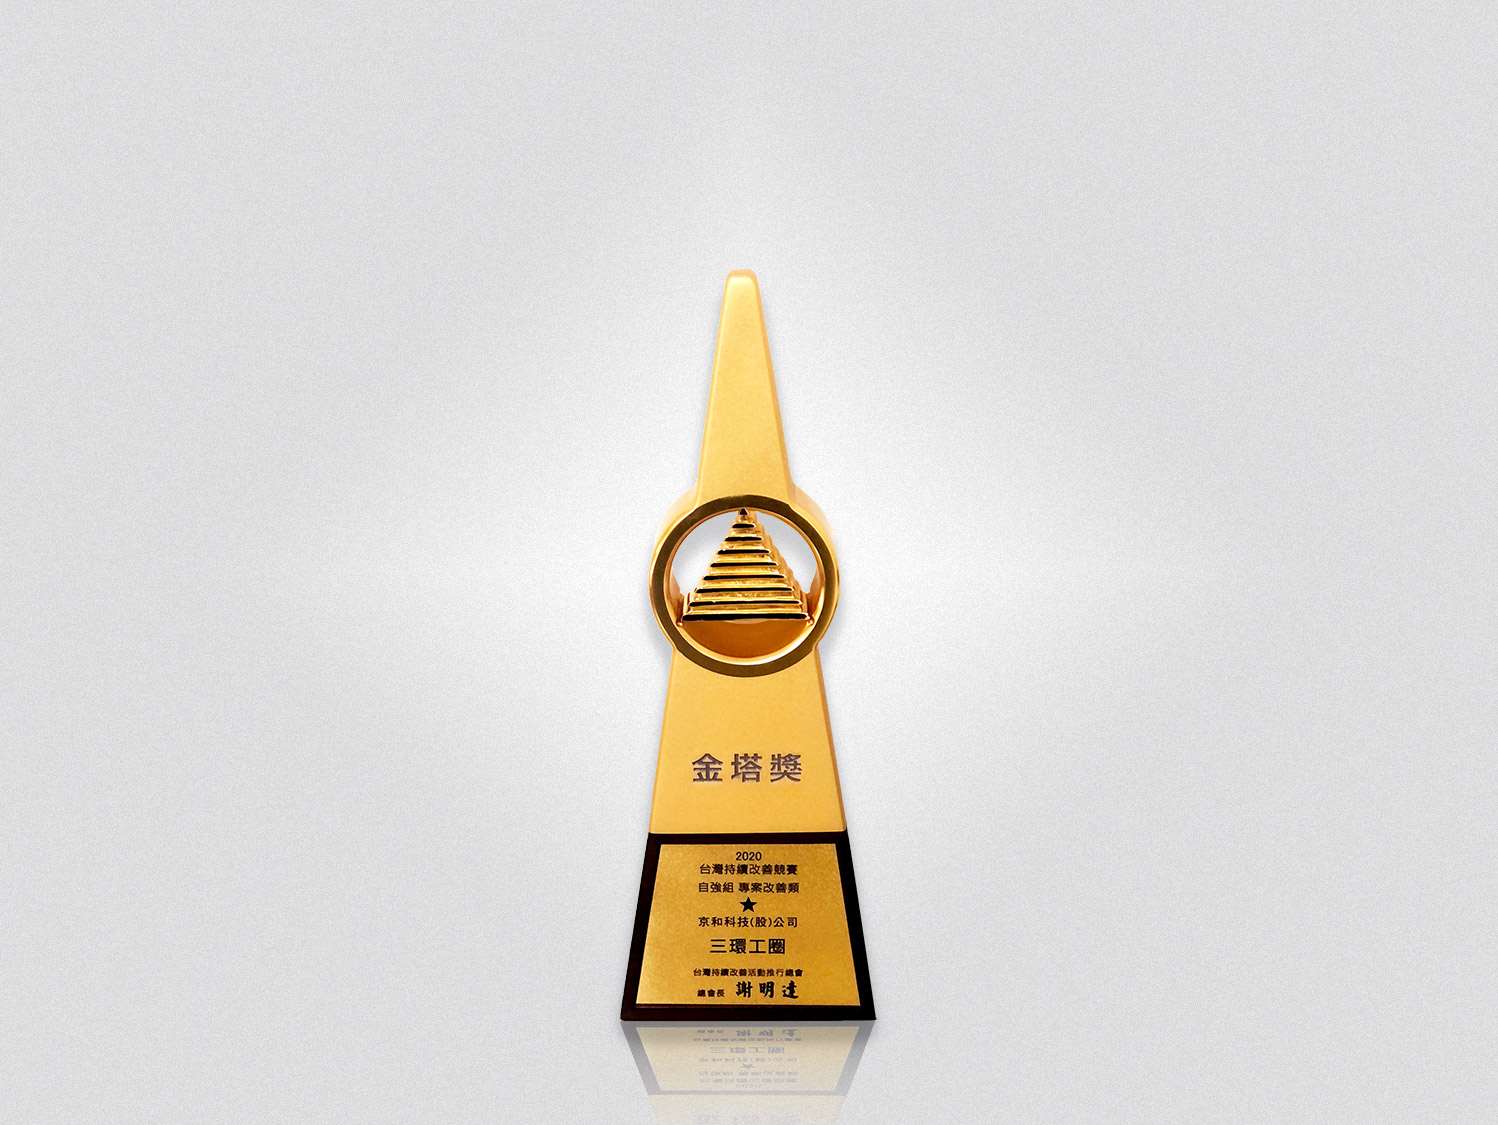 2020 TCIA（Taiwan Continuous Improvement Awards）Triple circle engineering group(Golden tower award)